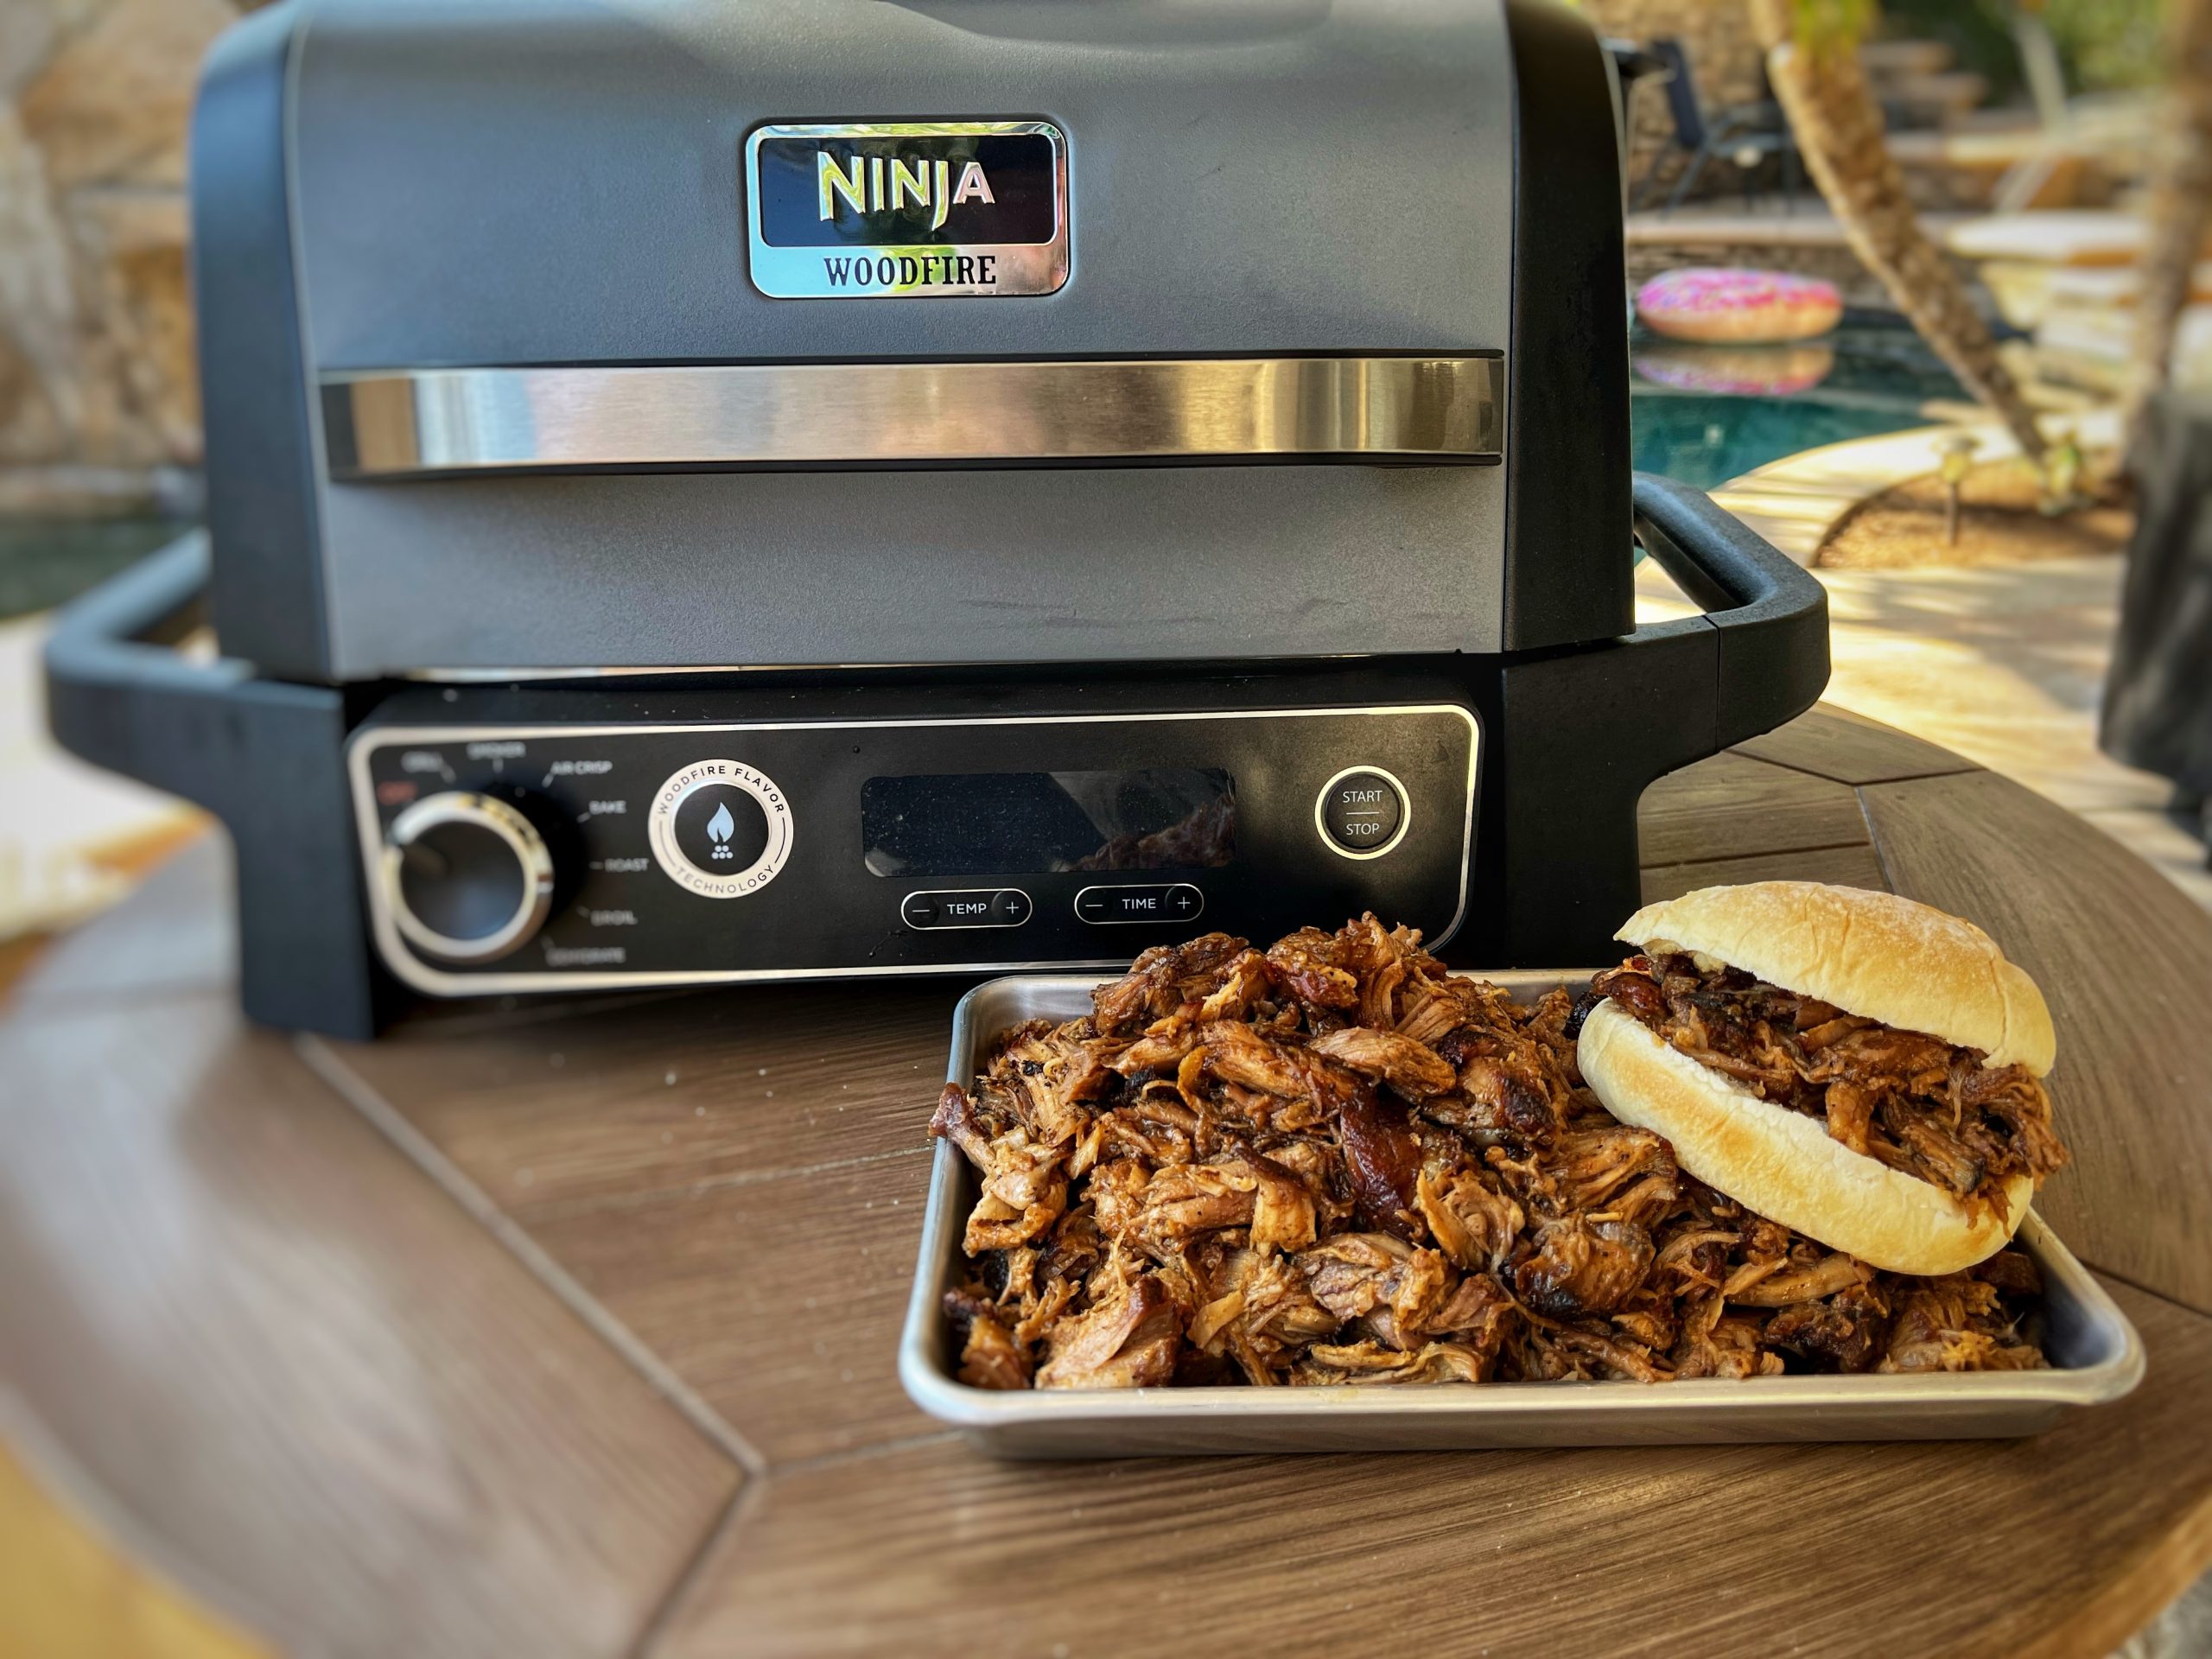 Ninja Woodfire Grill Vol II – Cooking with CJ